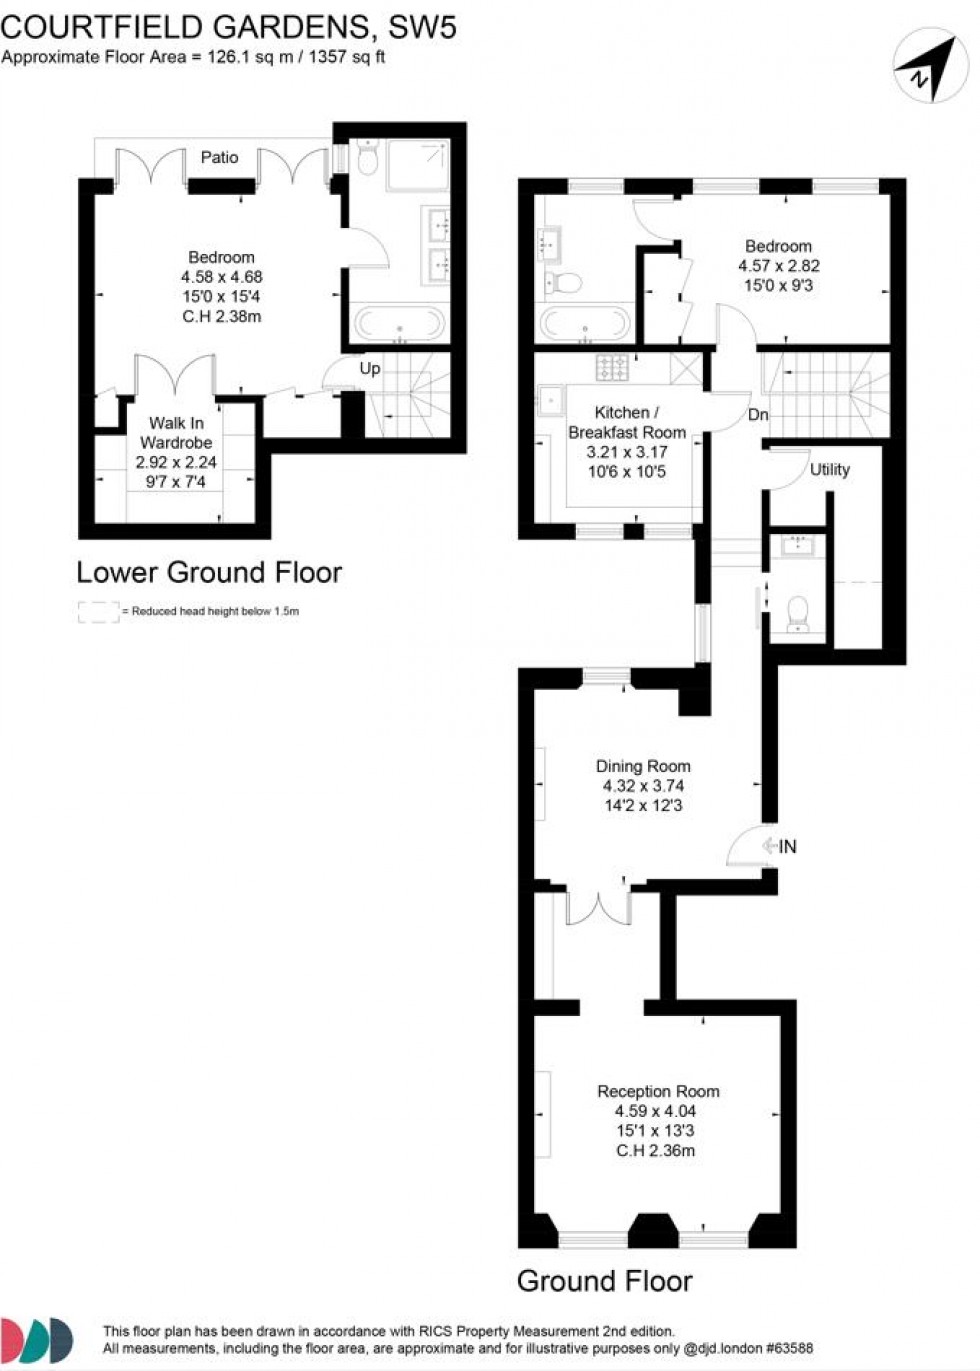 Floorplan for Courtfield Gardens, South Kensington, SW5